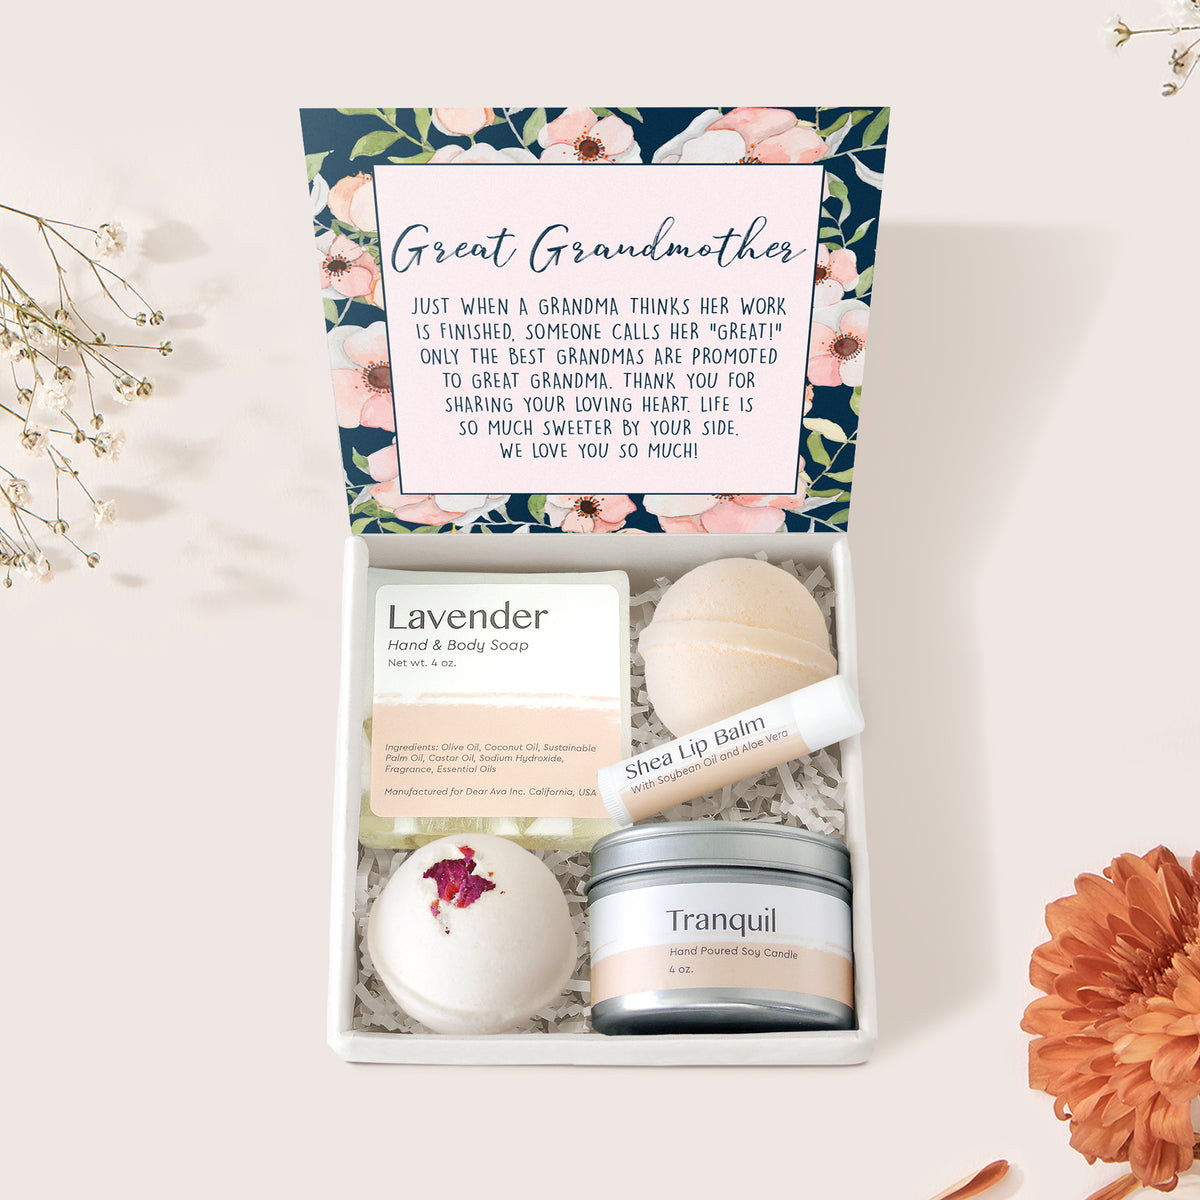 Great Grandmother Gift Box Set: Great Grandma to Be, Generations, Gift  Idea, Birthday, Christmas, Holiday Present - Dear Ava